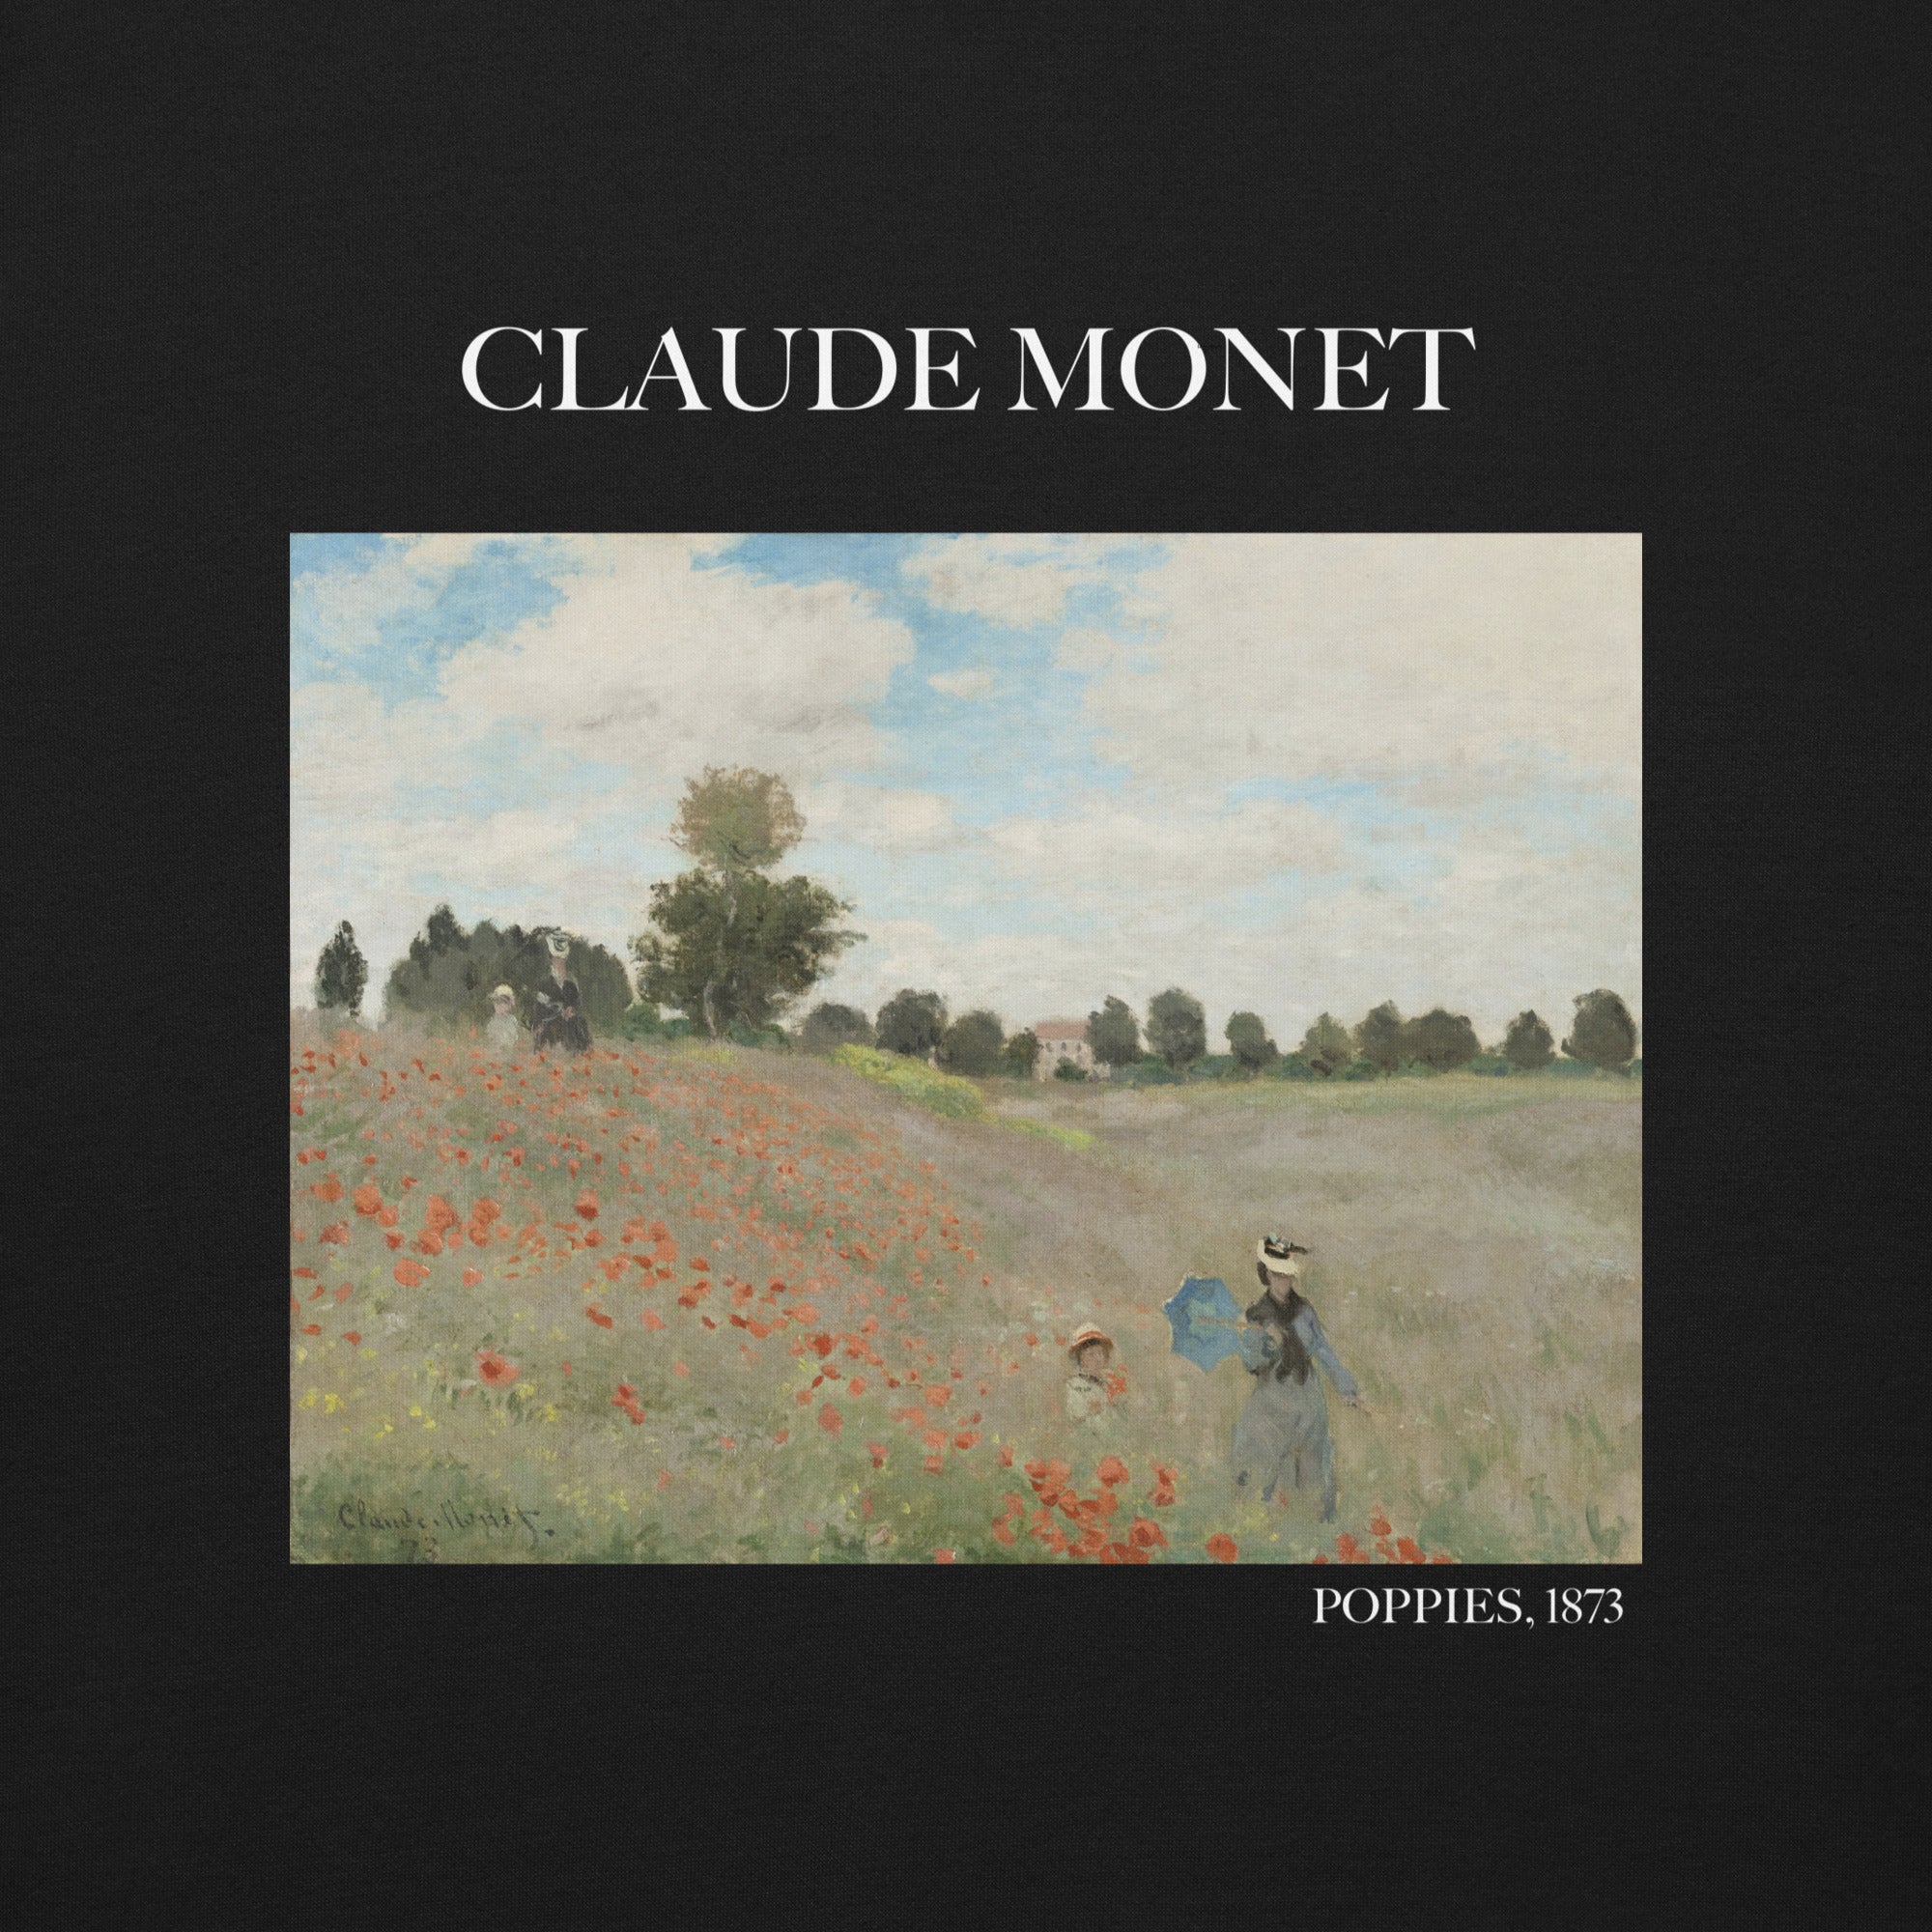 Sweatshirt „Mohnblumen“ von Claude Monet, berühmtes Gemälde, Unisex, Premium-Sweatshirt